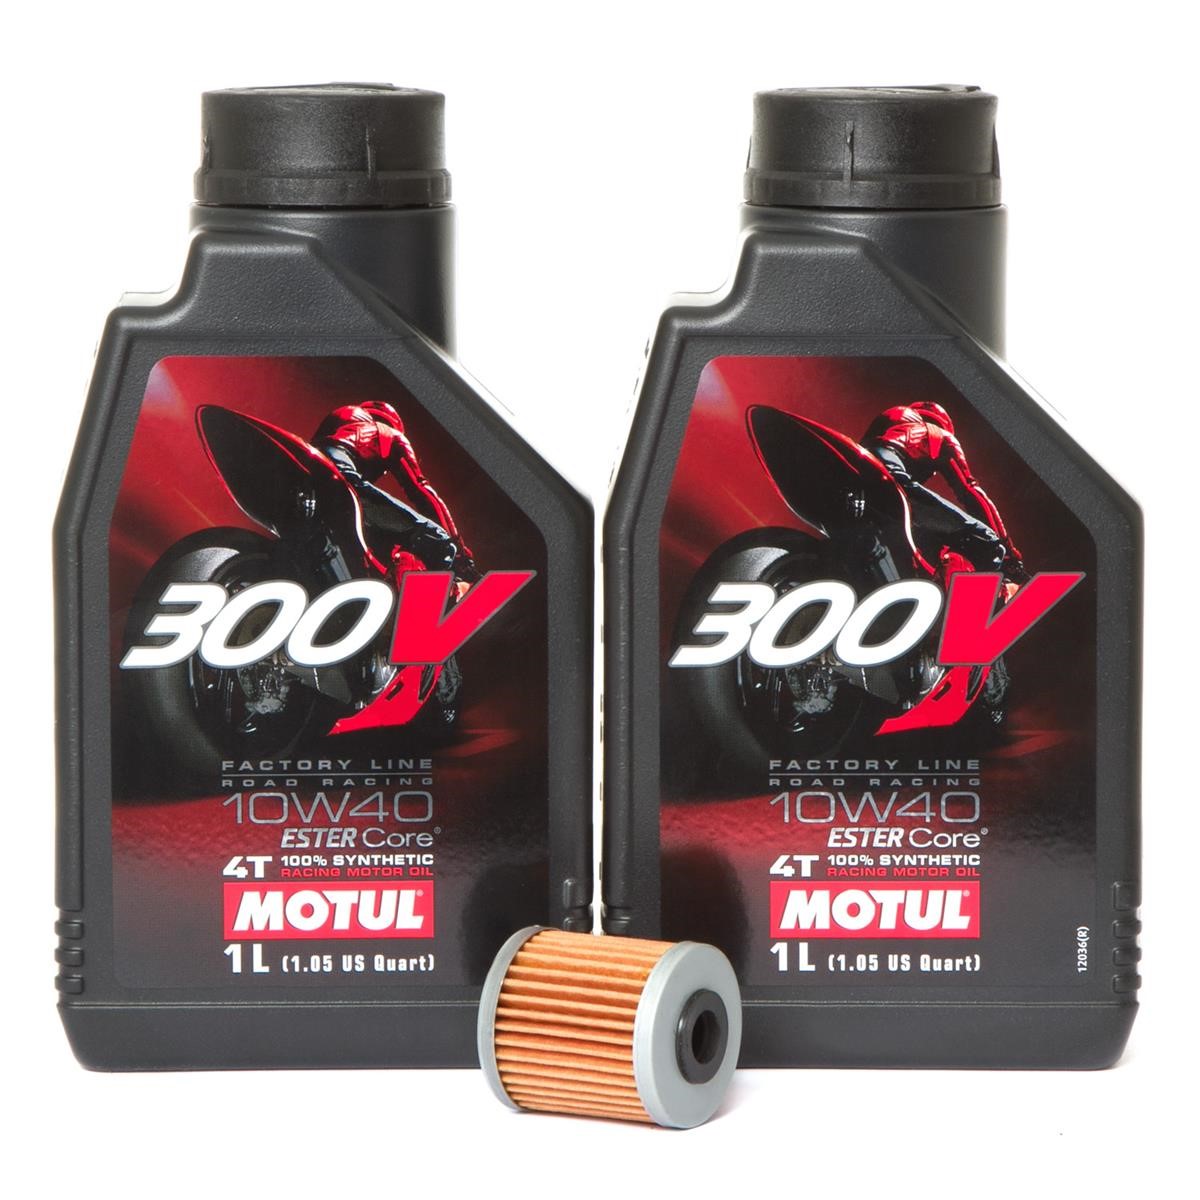 Motul Motorenöl-Set 10W40 inkl. Ölfilter für GasGas, Yamaha, Husqvarna